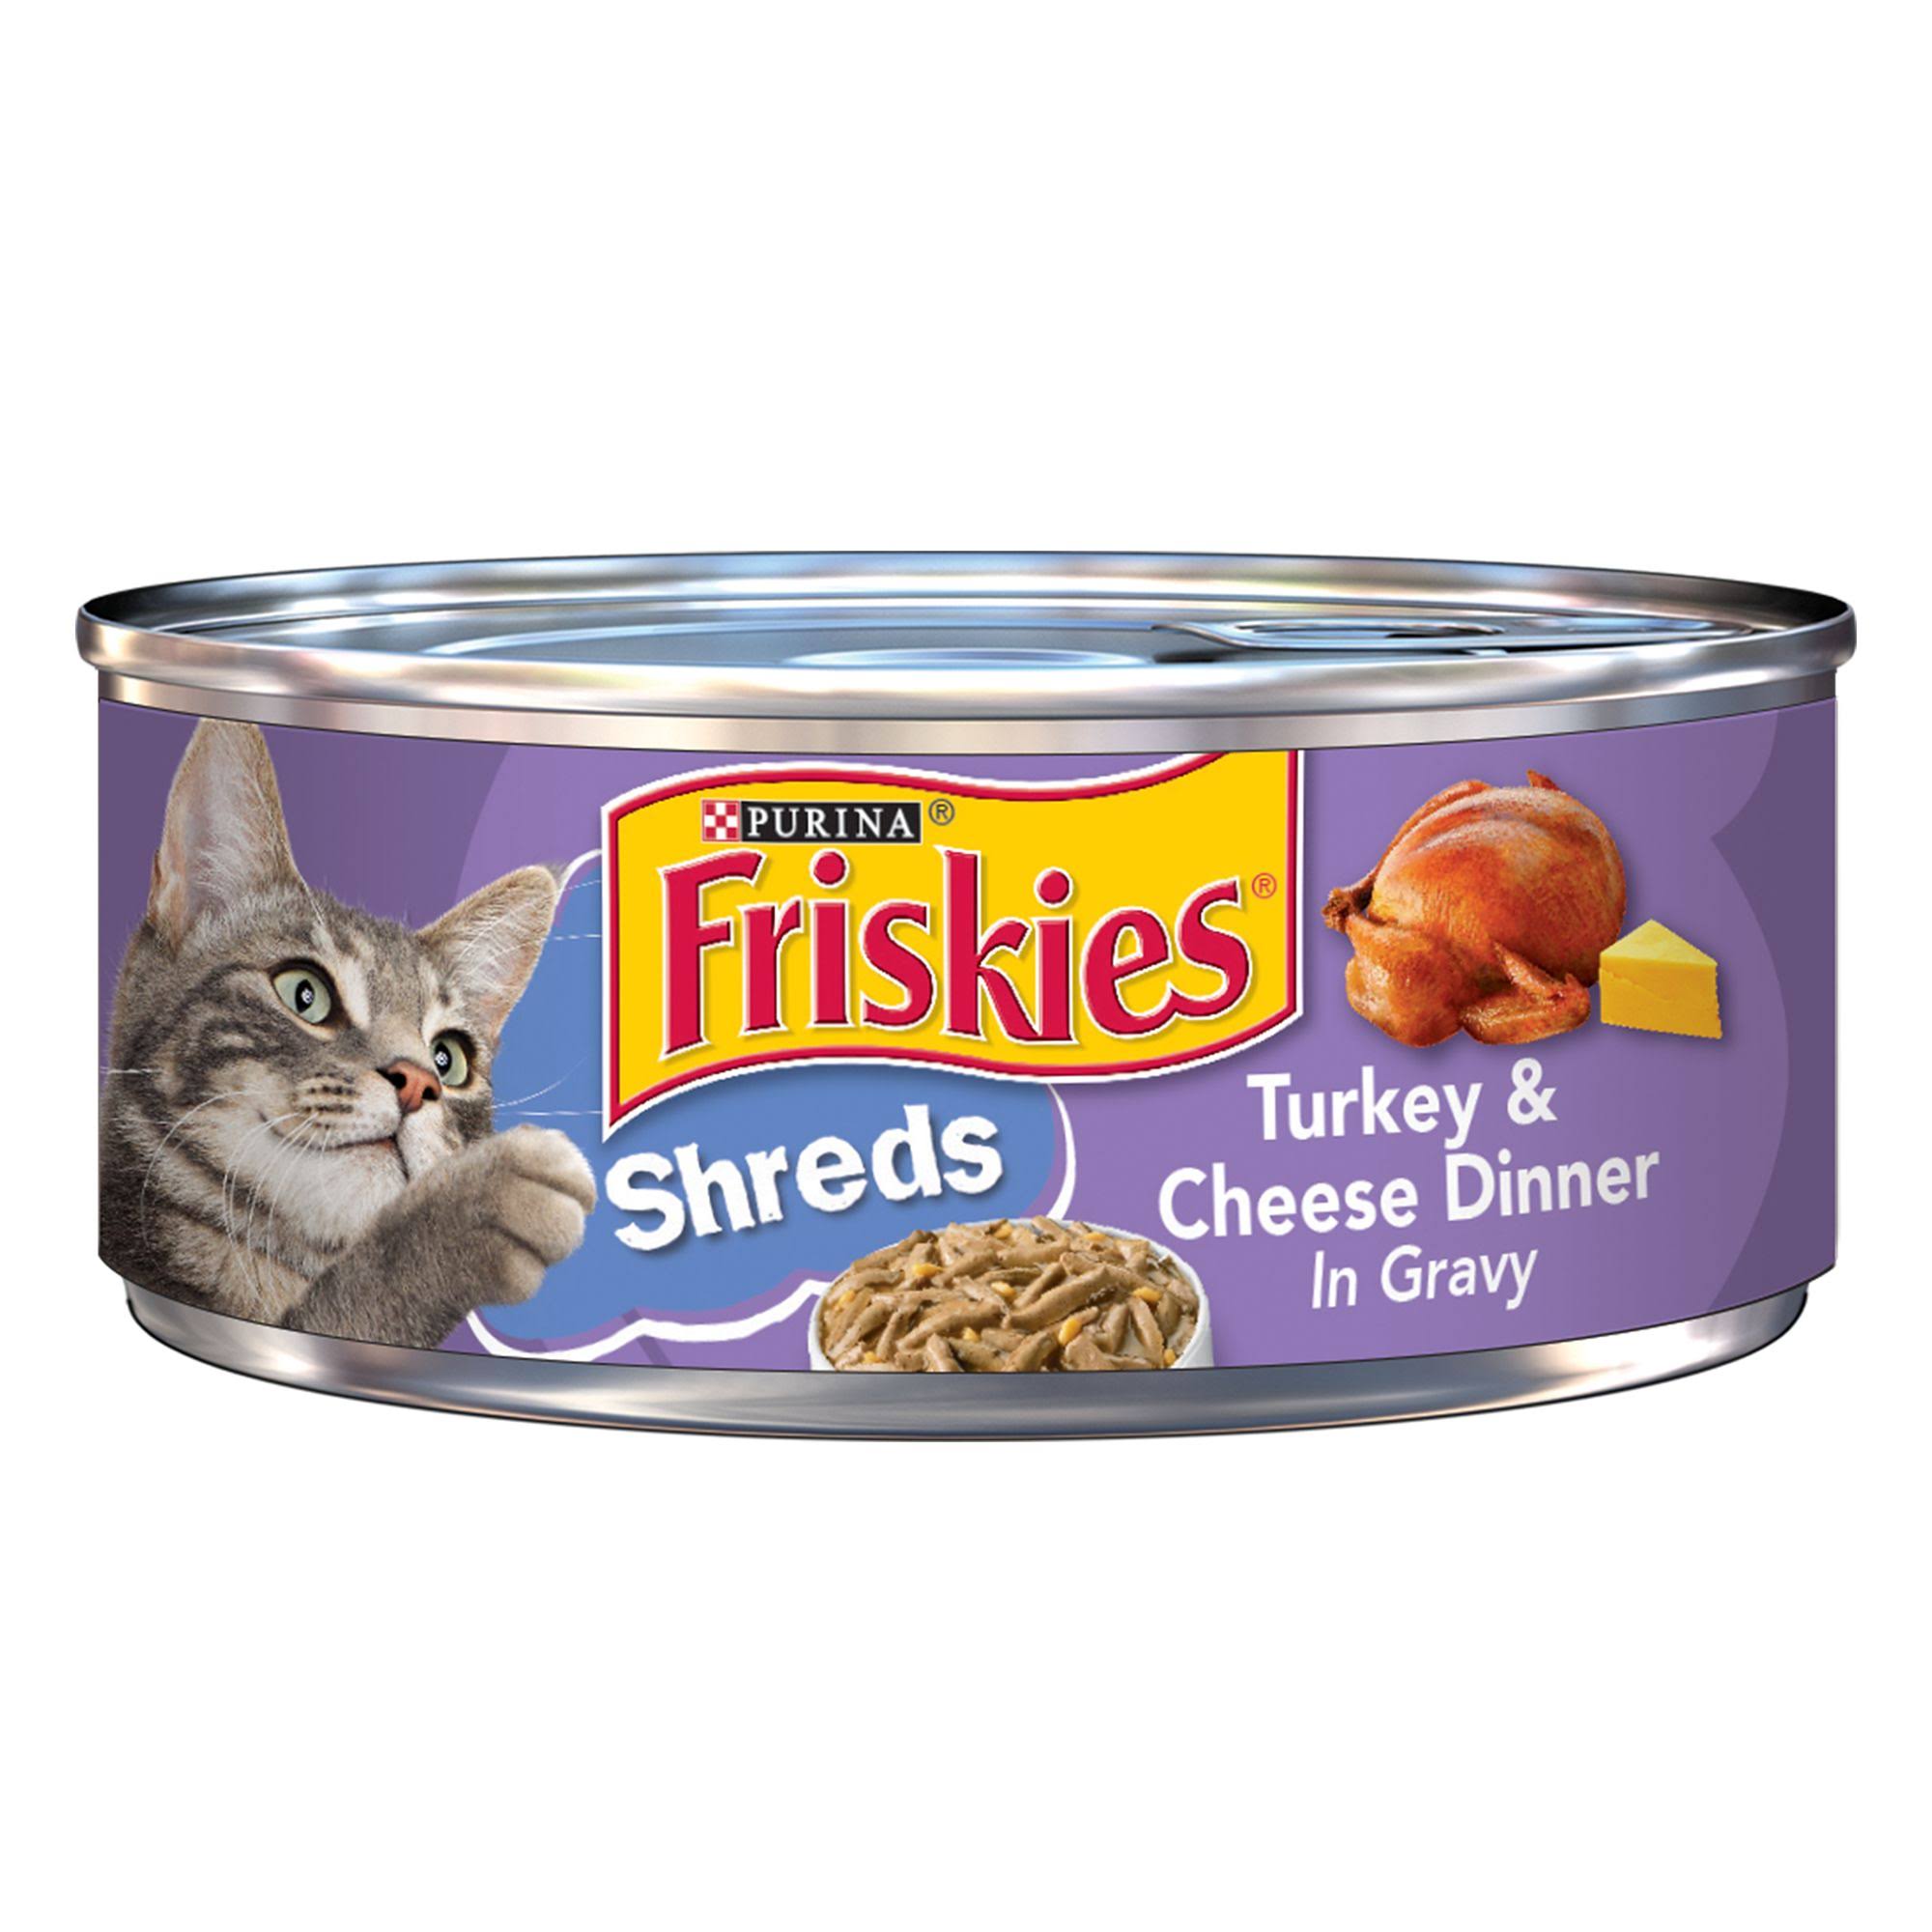 Purina Friskies Savory Shreds Cat Food - Turkey & Cheese Dinner in Gravy